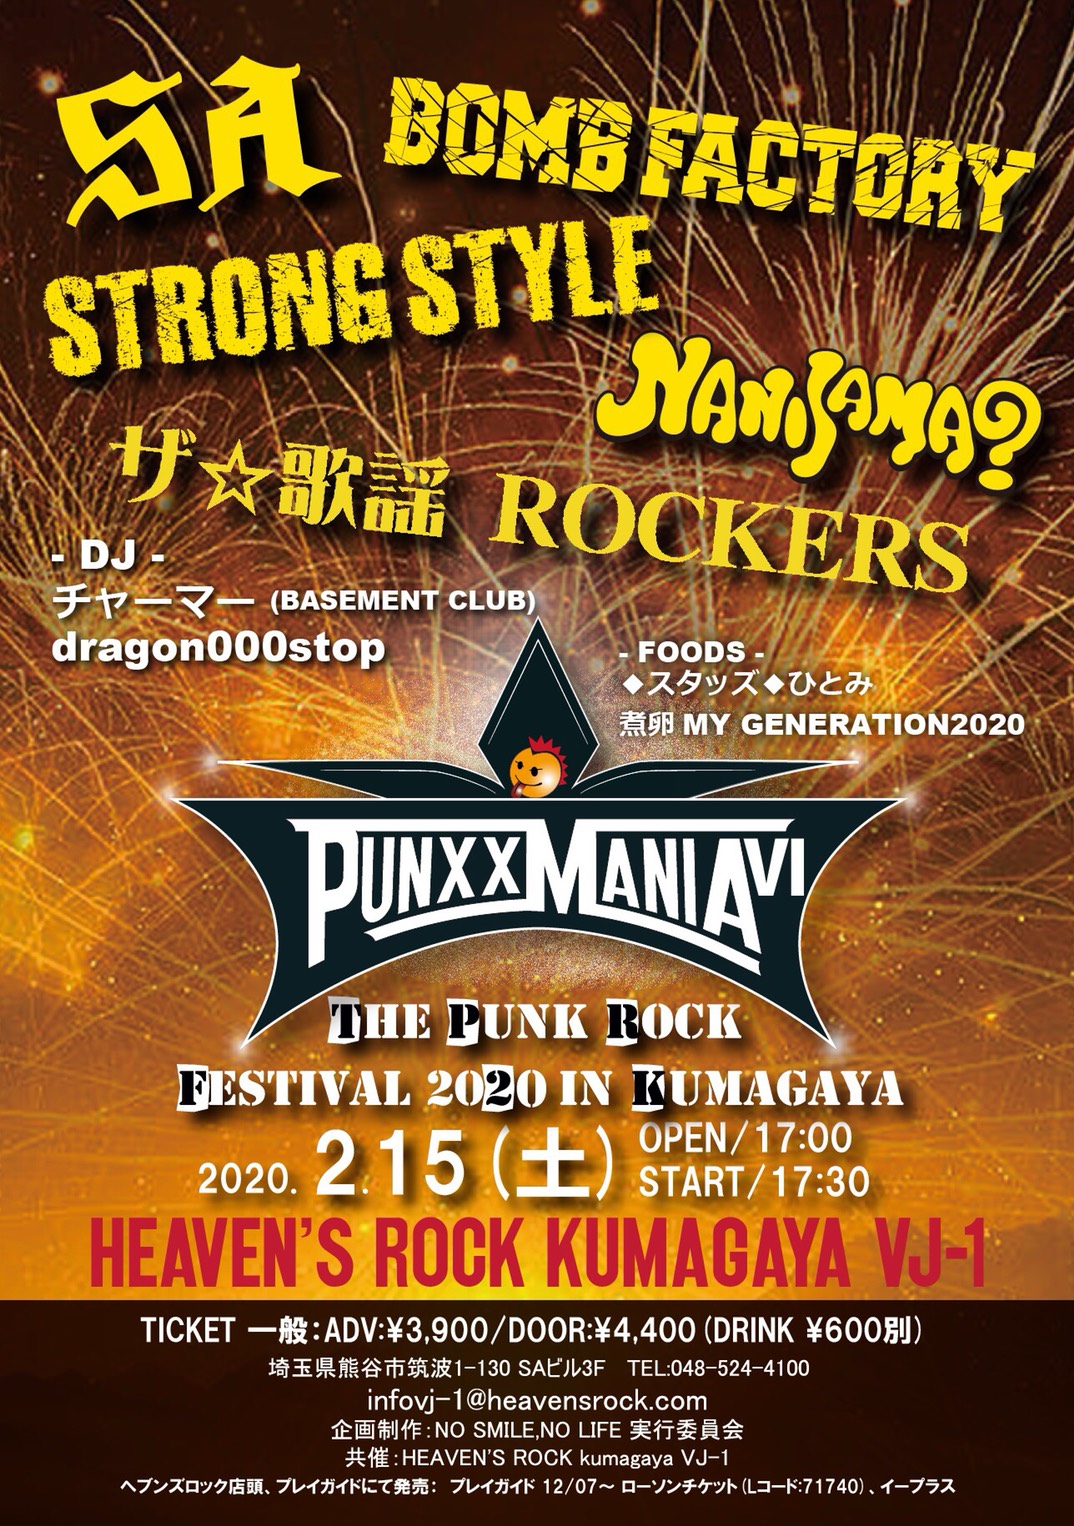 02/15(土) 熊谷 HEAVEN'S ROCK VJ-1